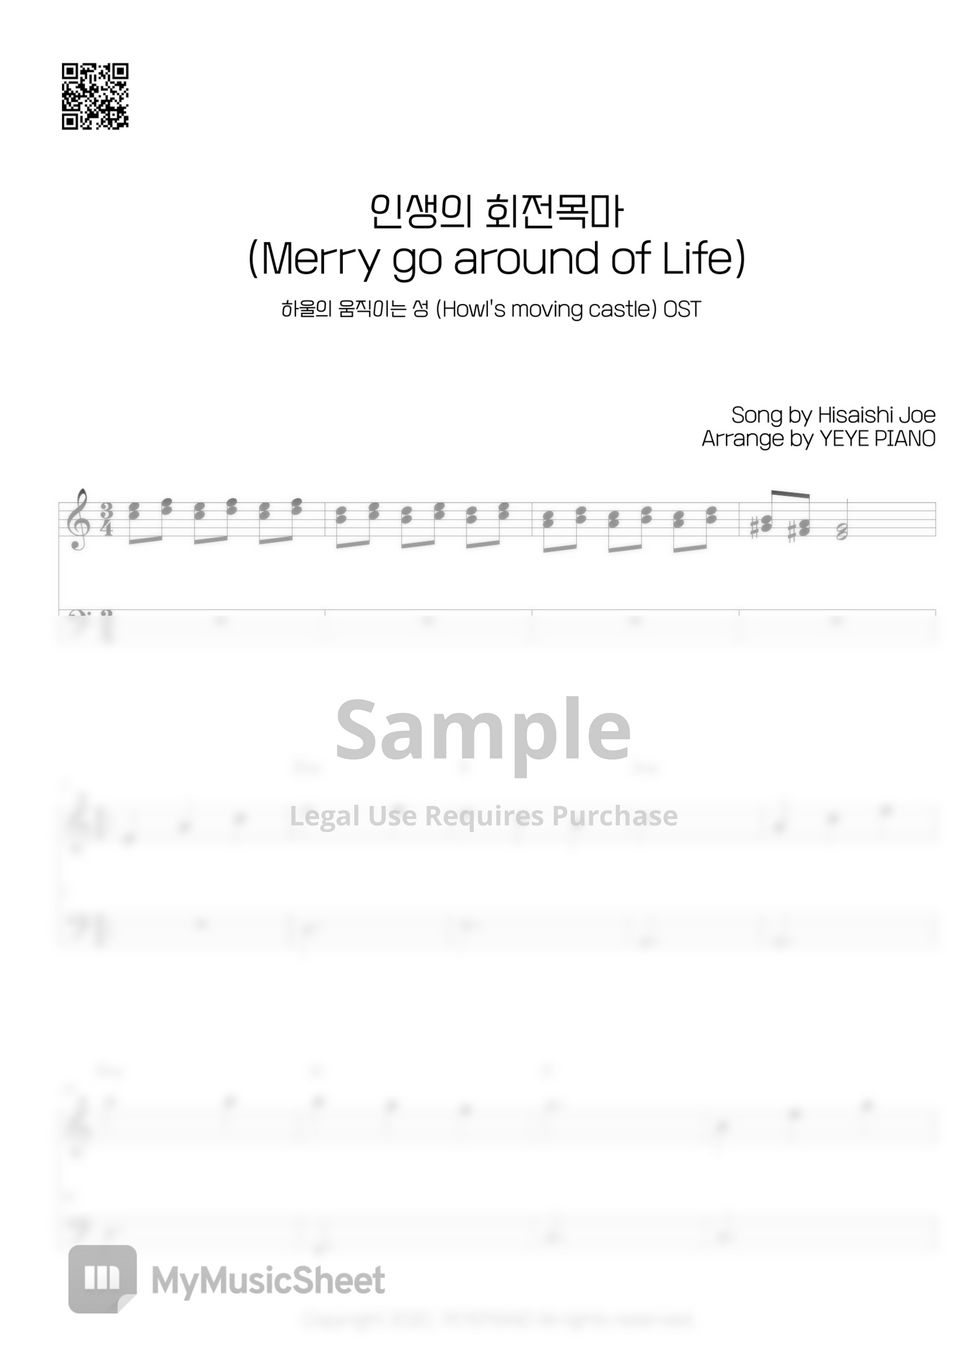 Hisaishi Joe - Merry go around of Life - Am key (Howl's Moving Castle OST) by YEYE PIANO